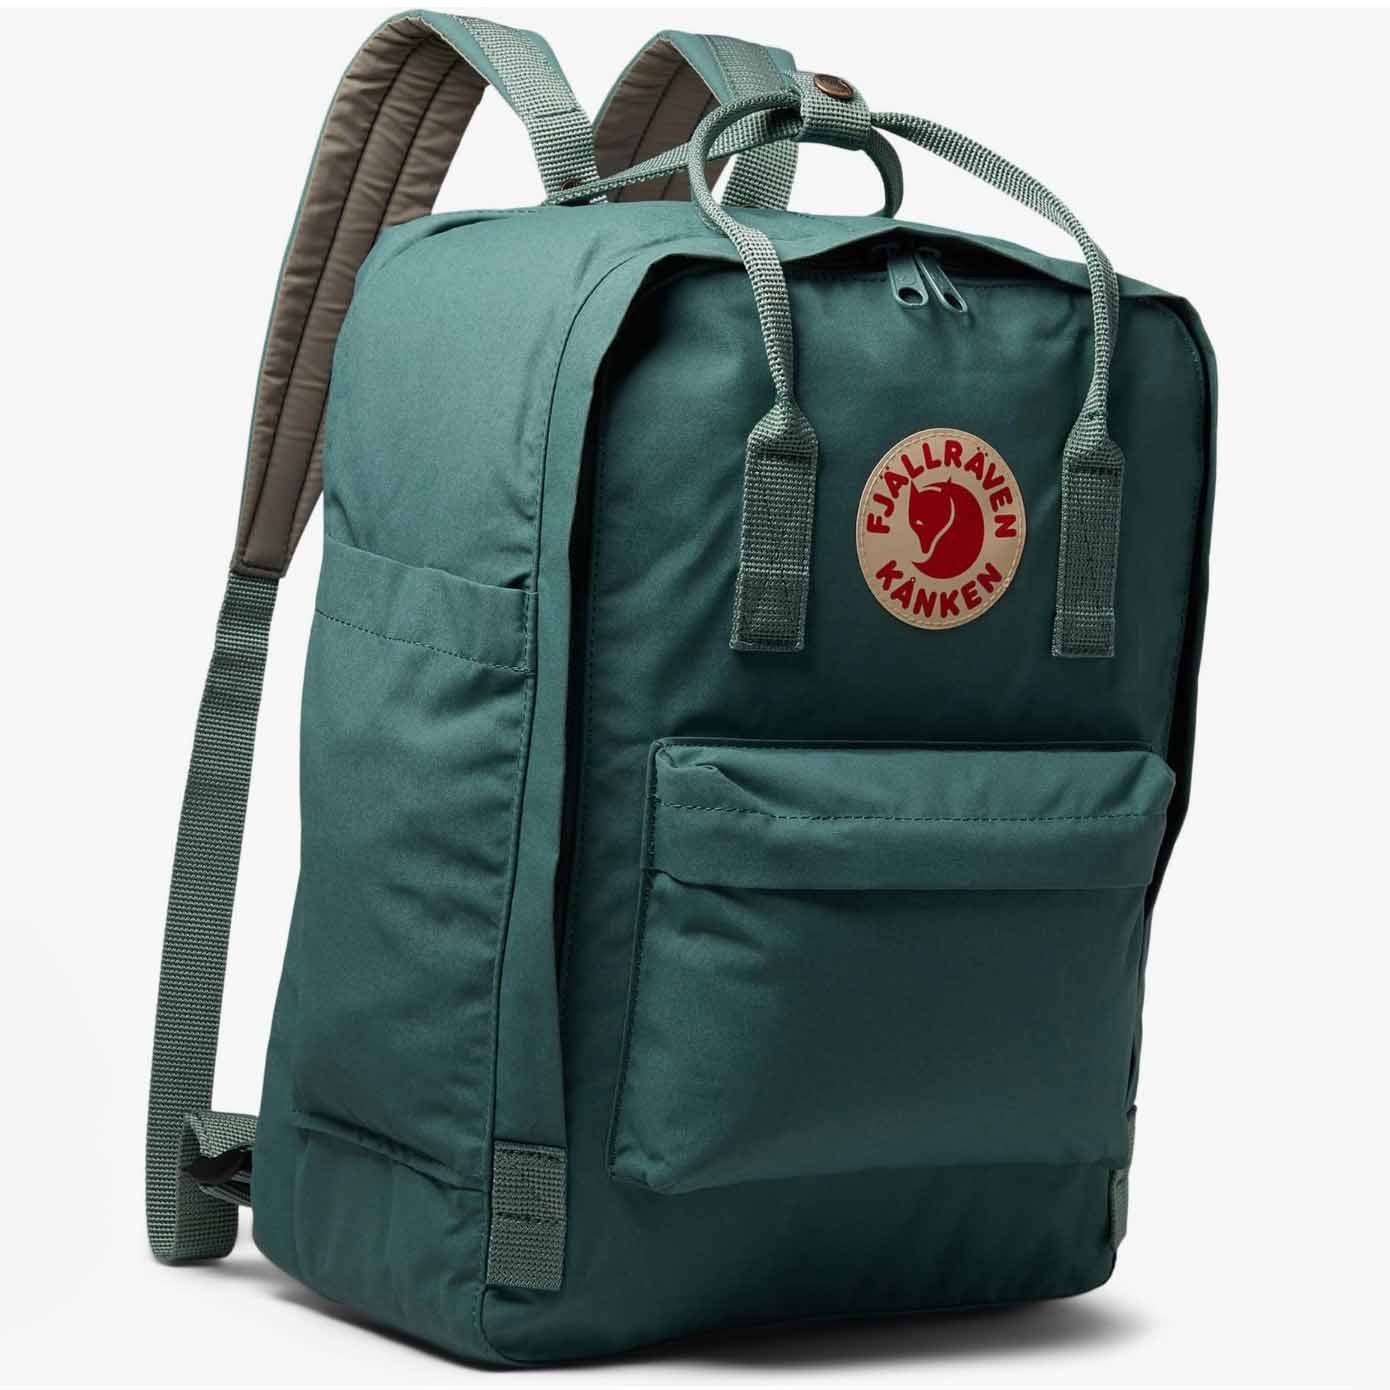 Green laptop backpack